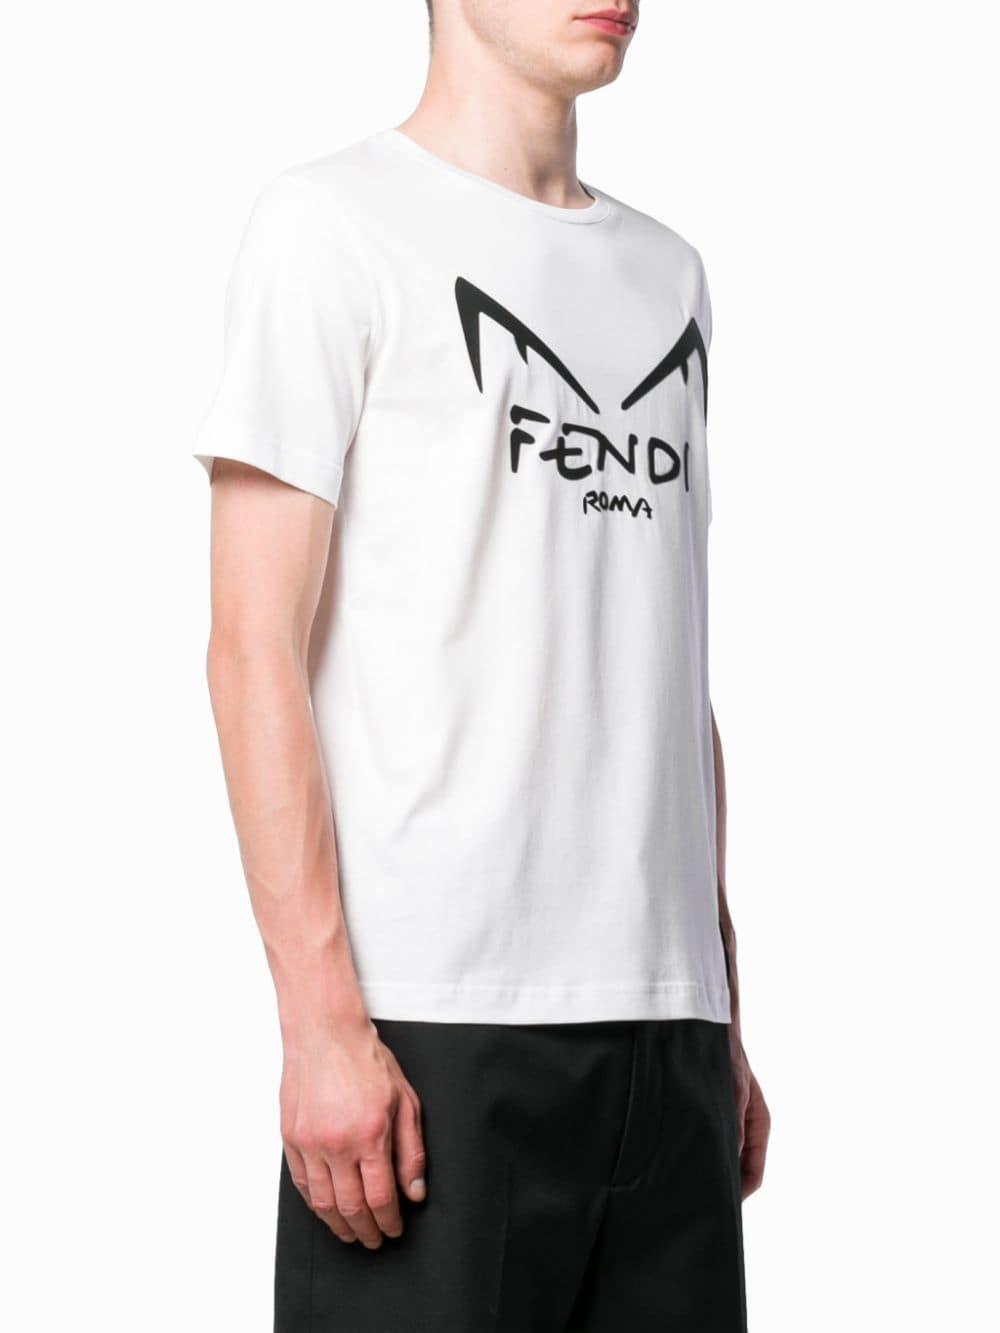 Fendi Cotton Diabolic Eyes Logo T-shirt in White for Men - Lyst